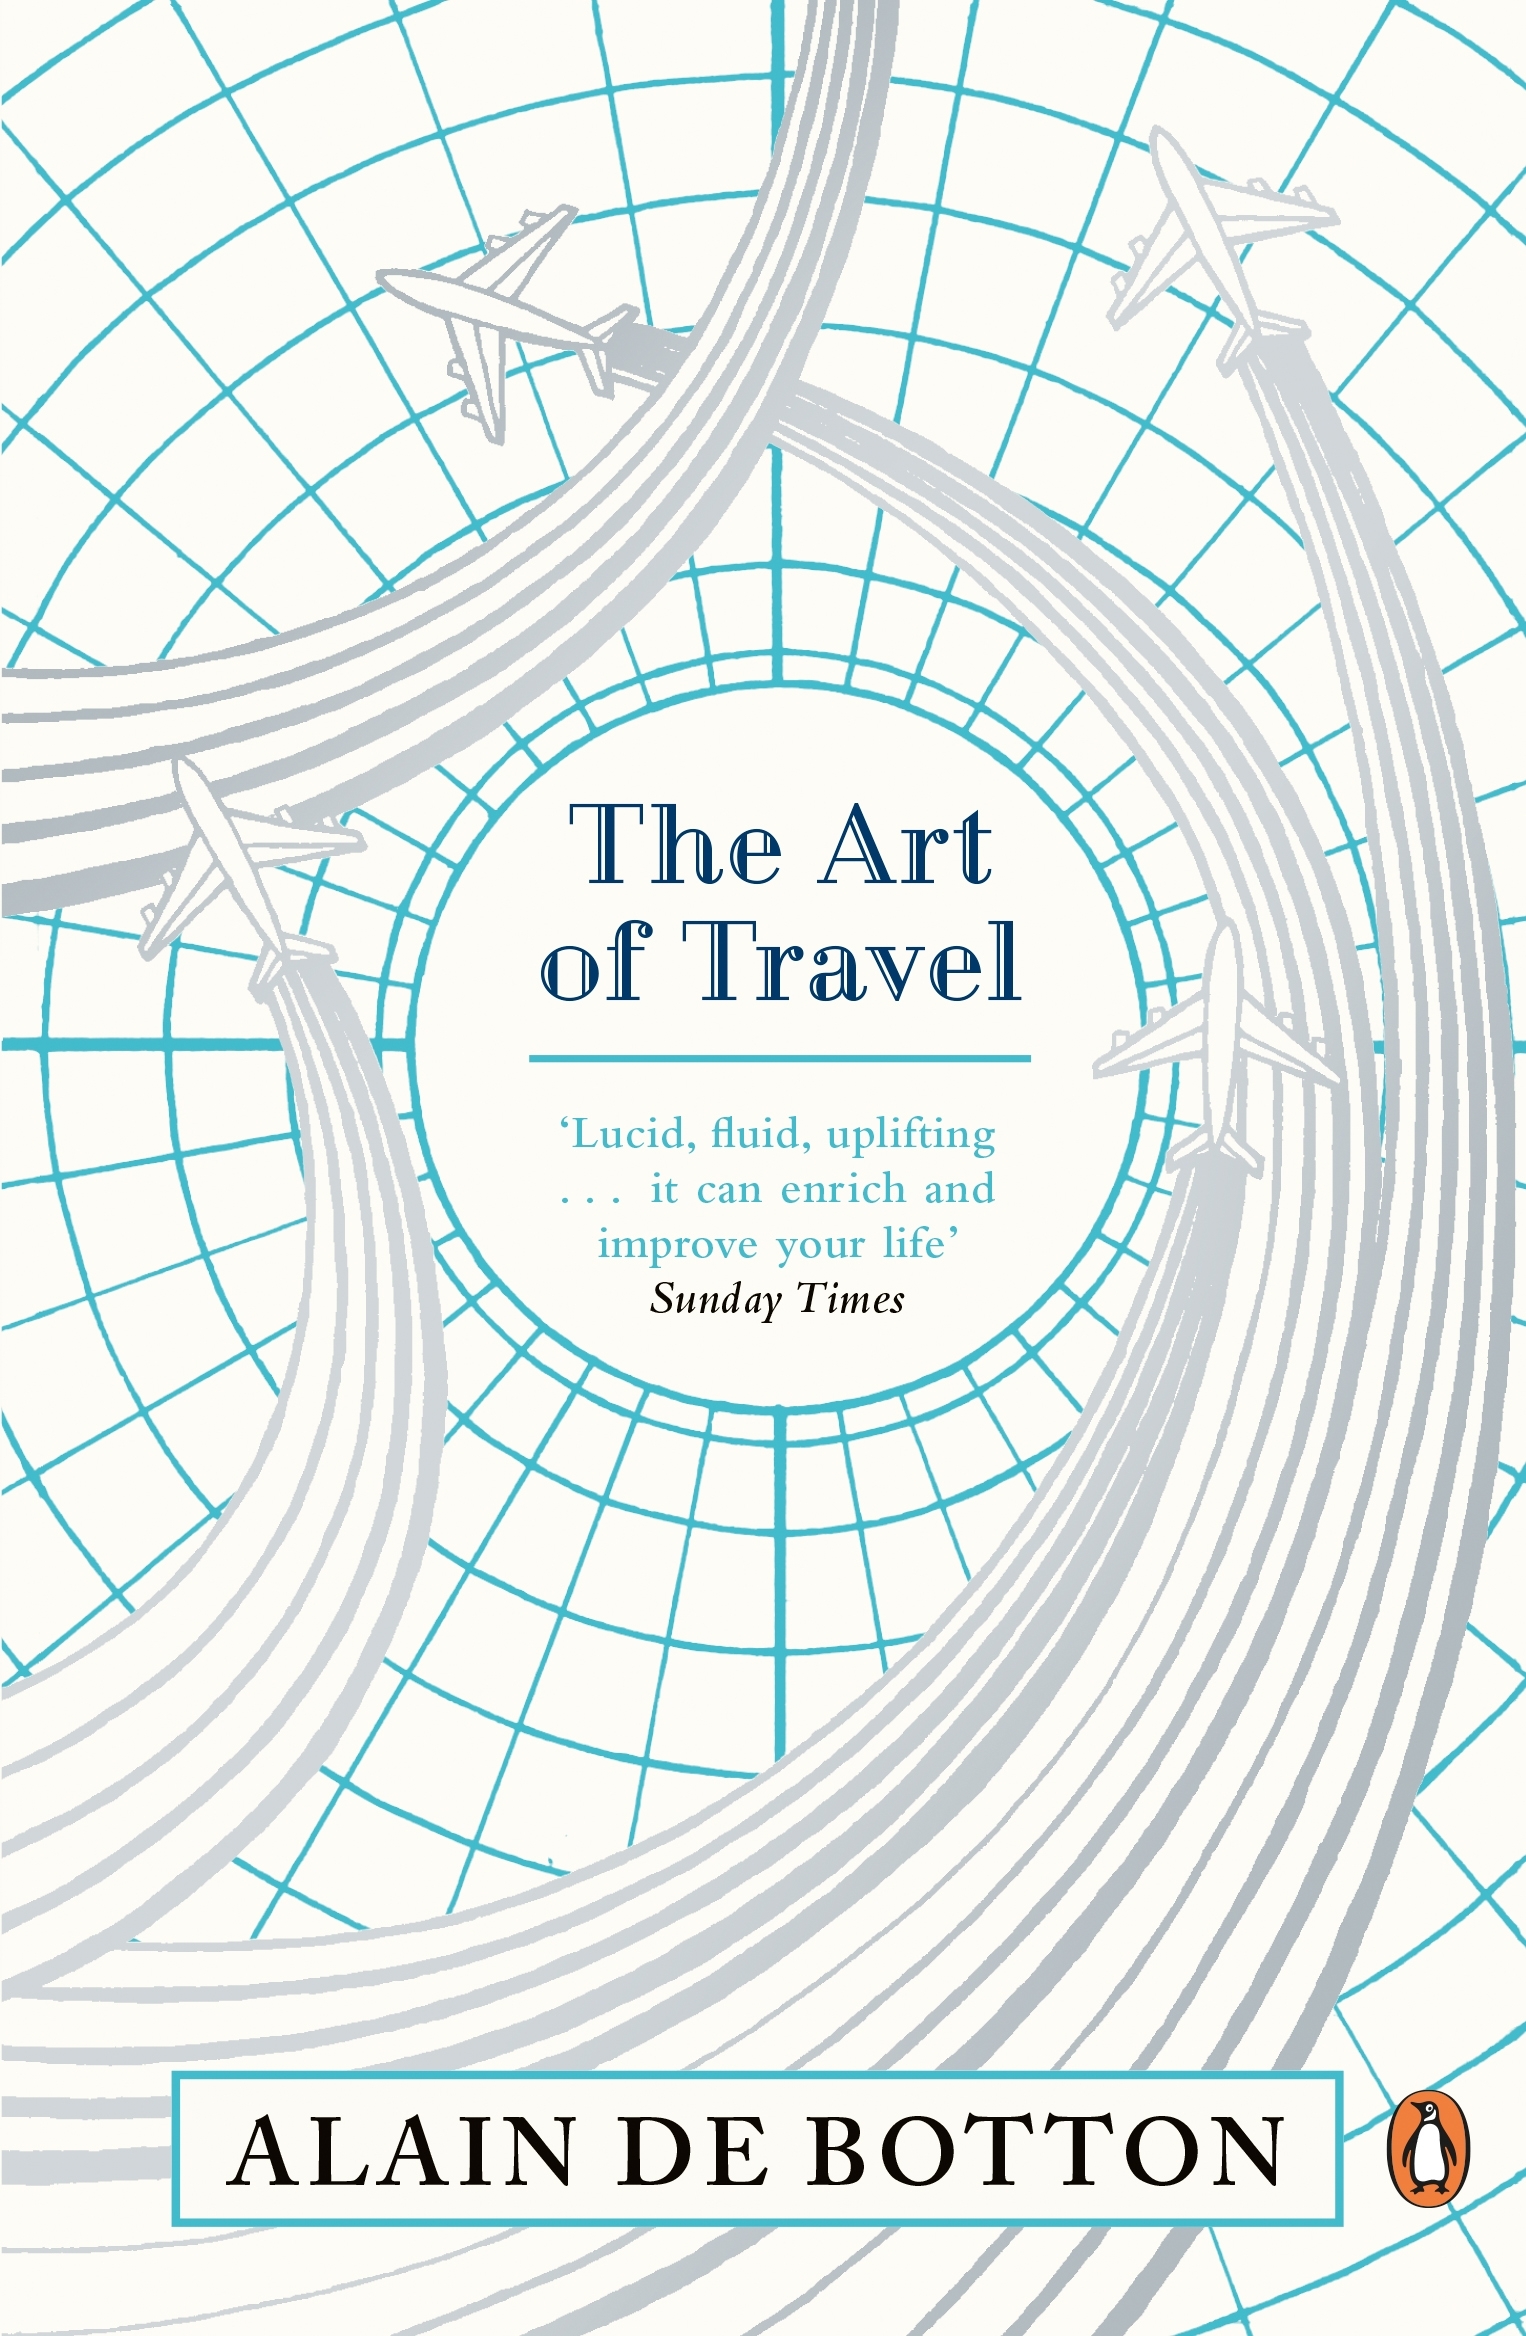 The Art of Travel by Alain de Botton - Penguin Books New Zealand